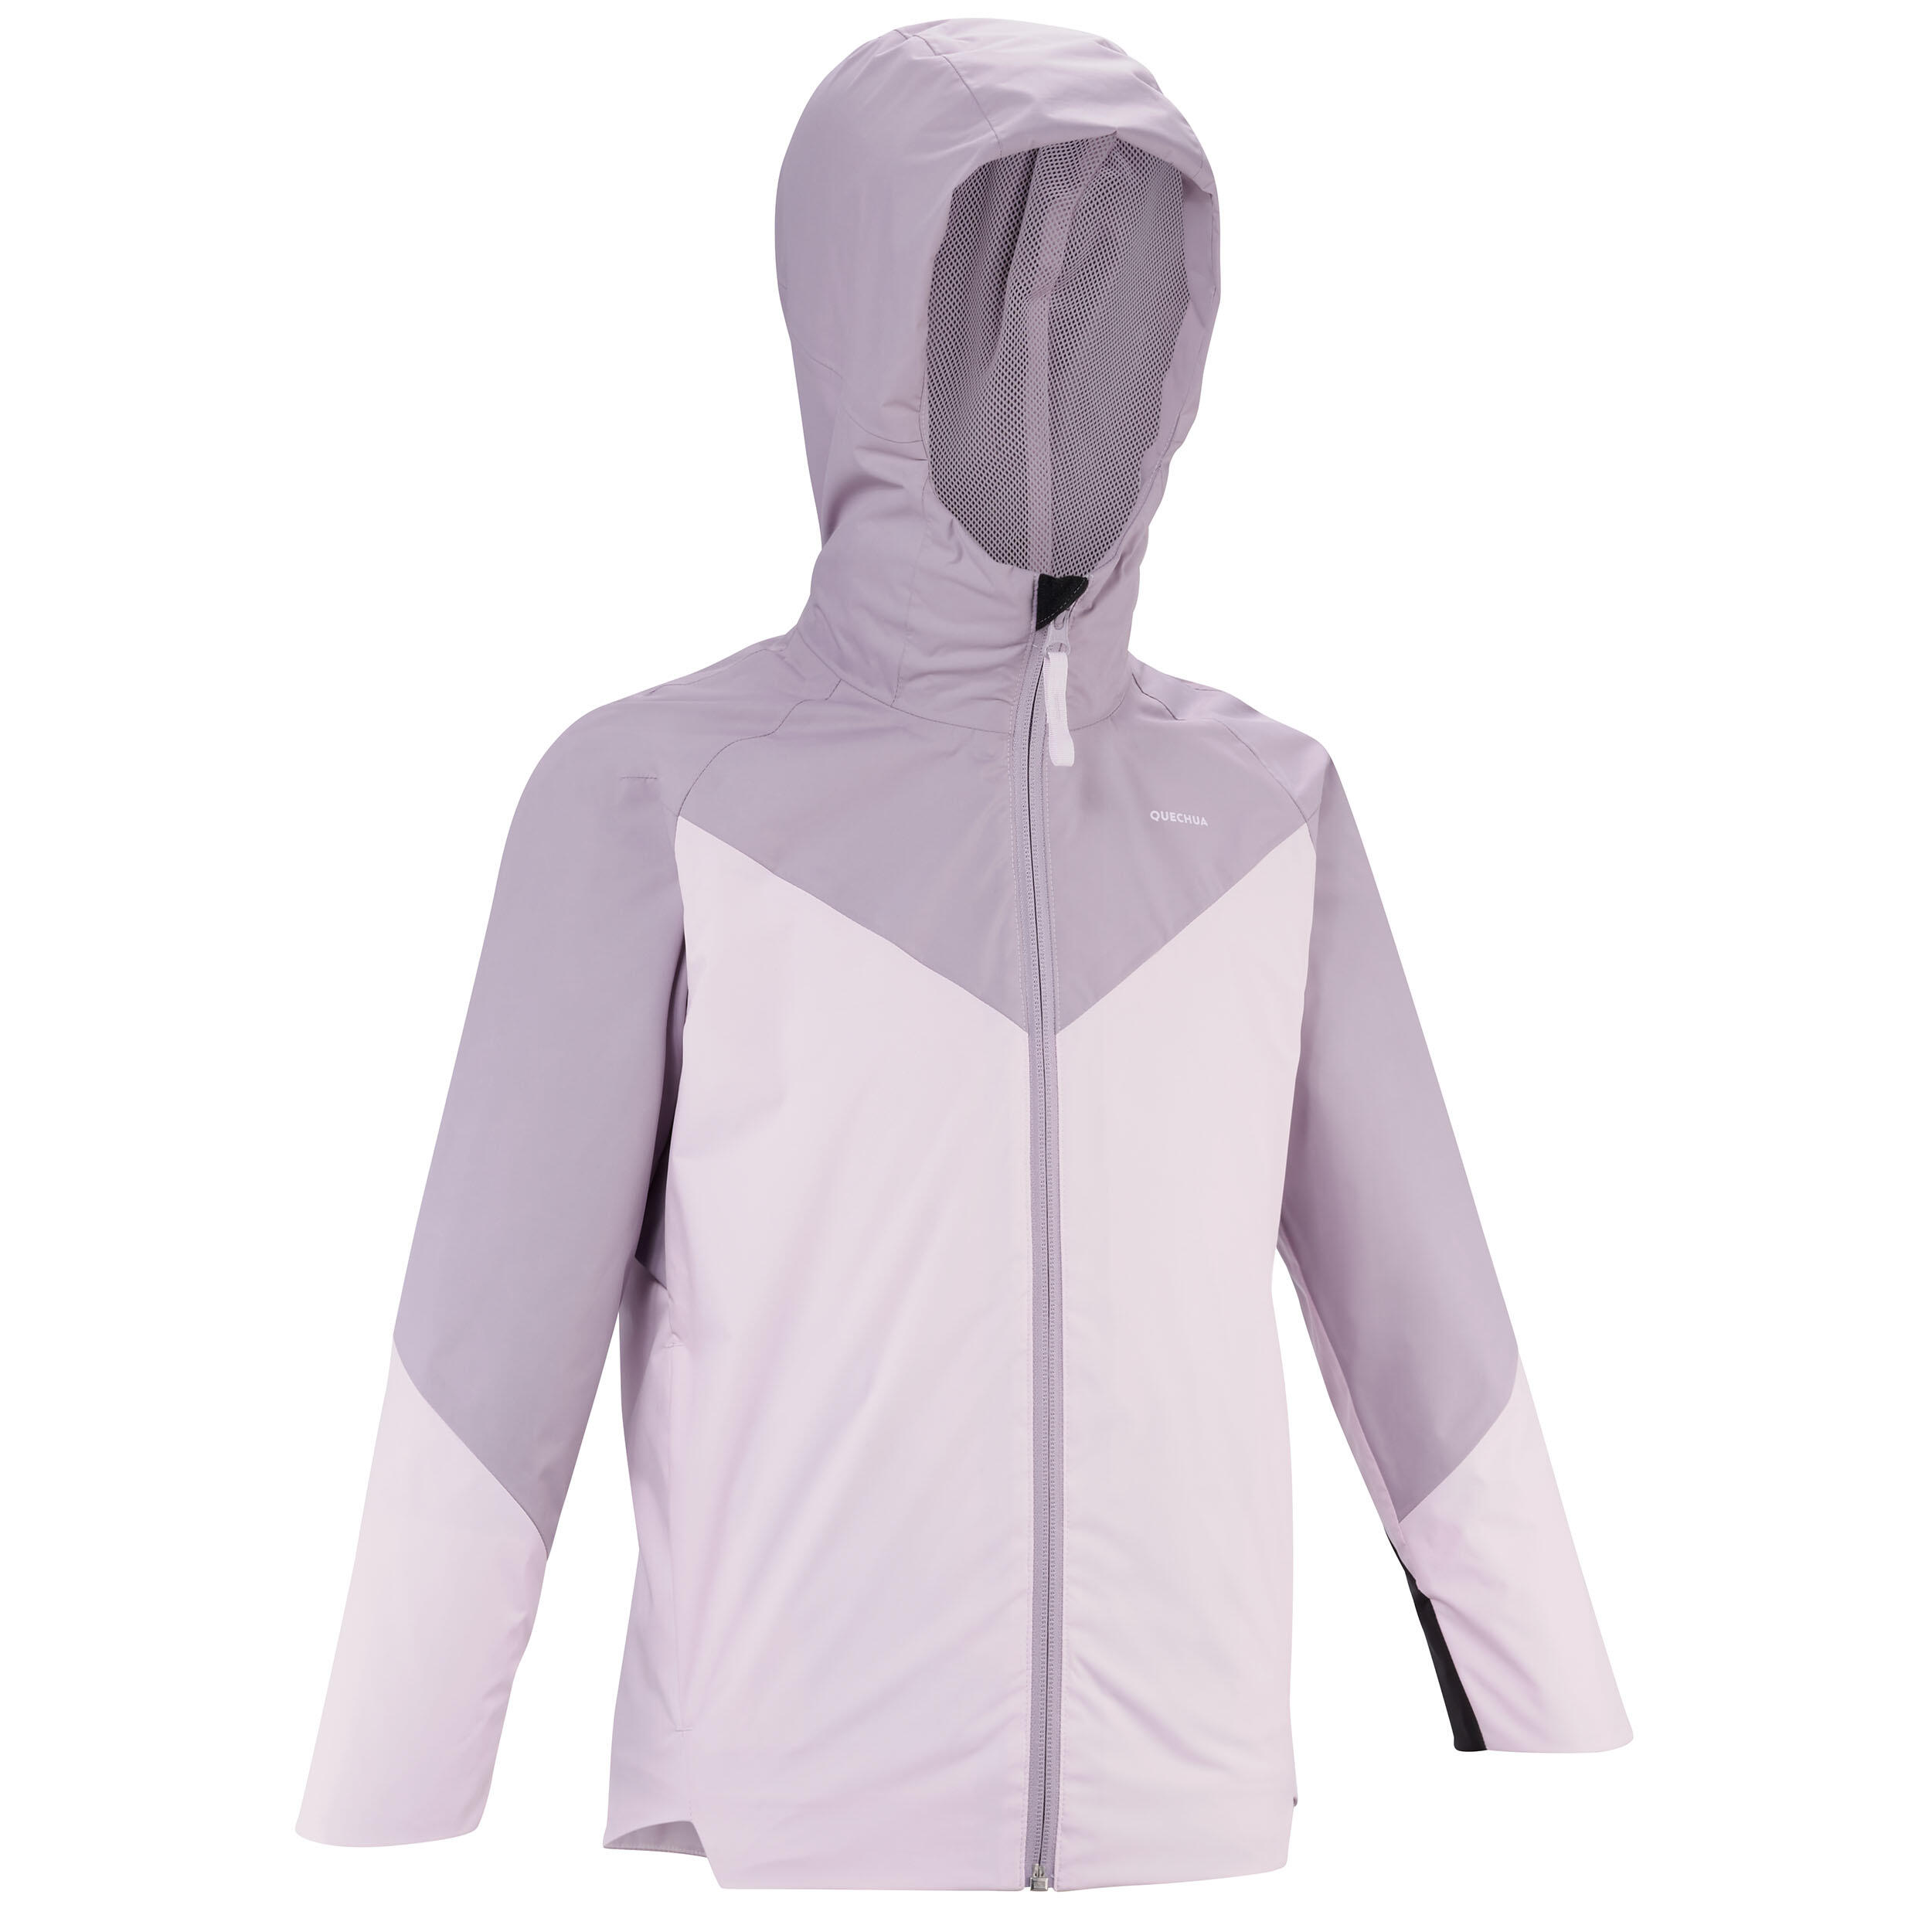 Child's waterproof hiking jacket - MH500 purple and mauve - 7-15 years 1/8